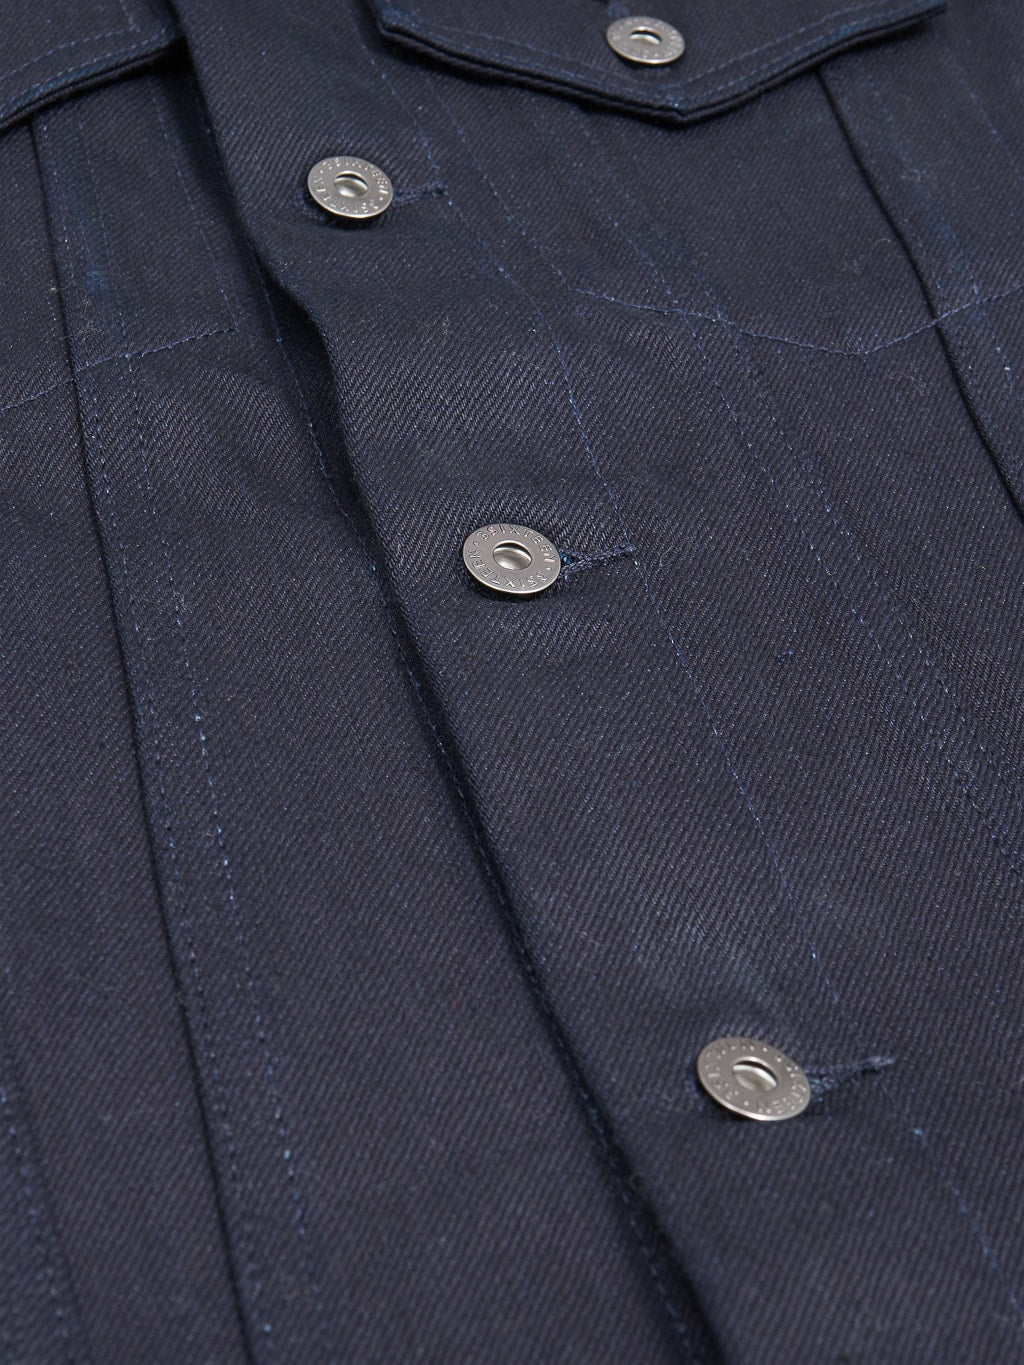 3sixteen type III denim jacket shadow selvedge indigo high contrast fades